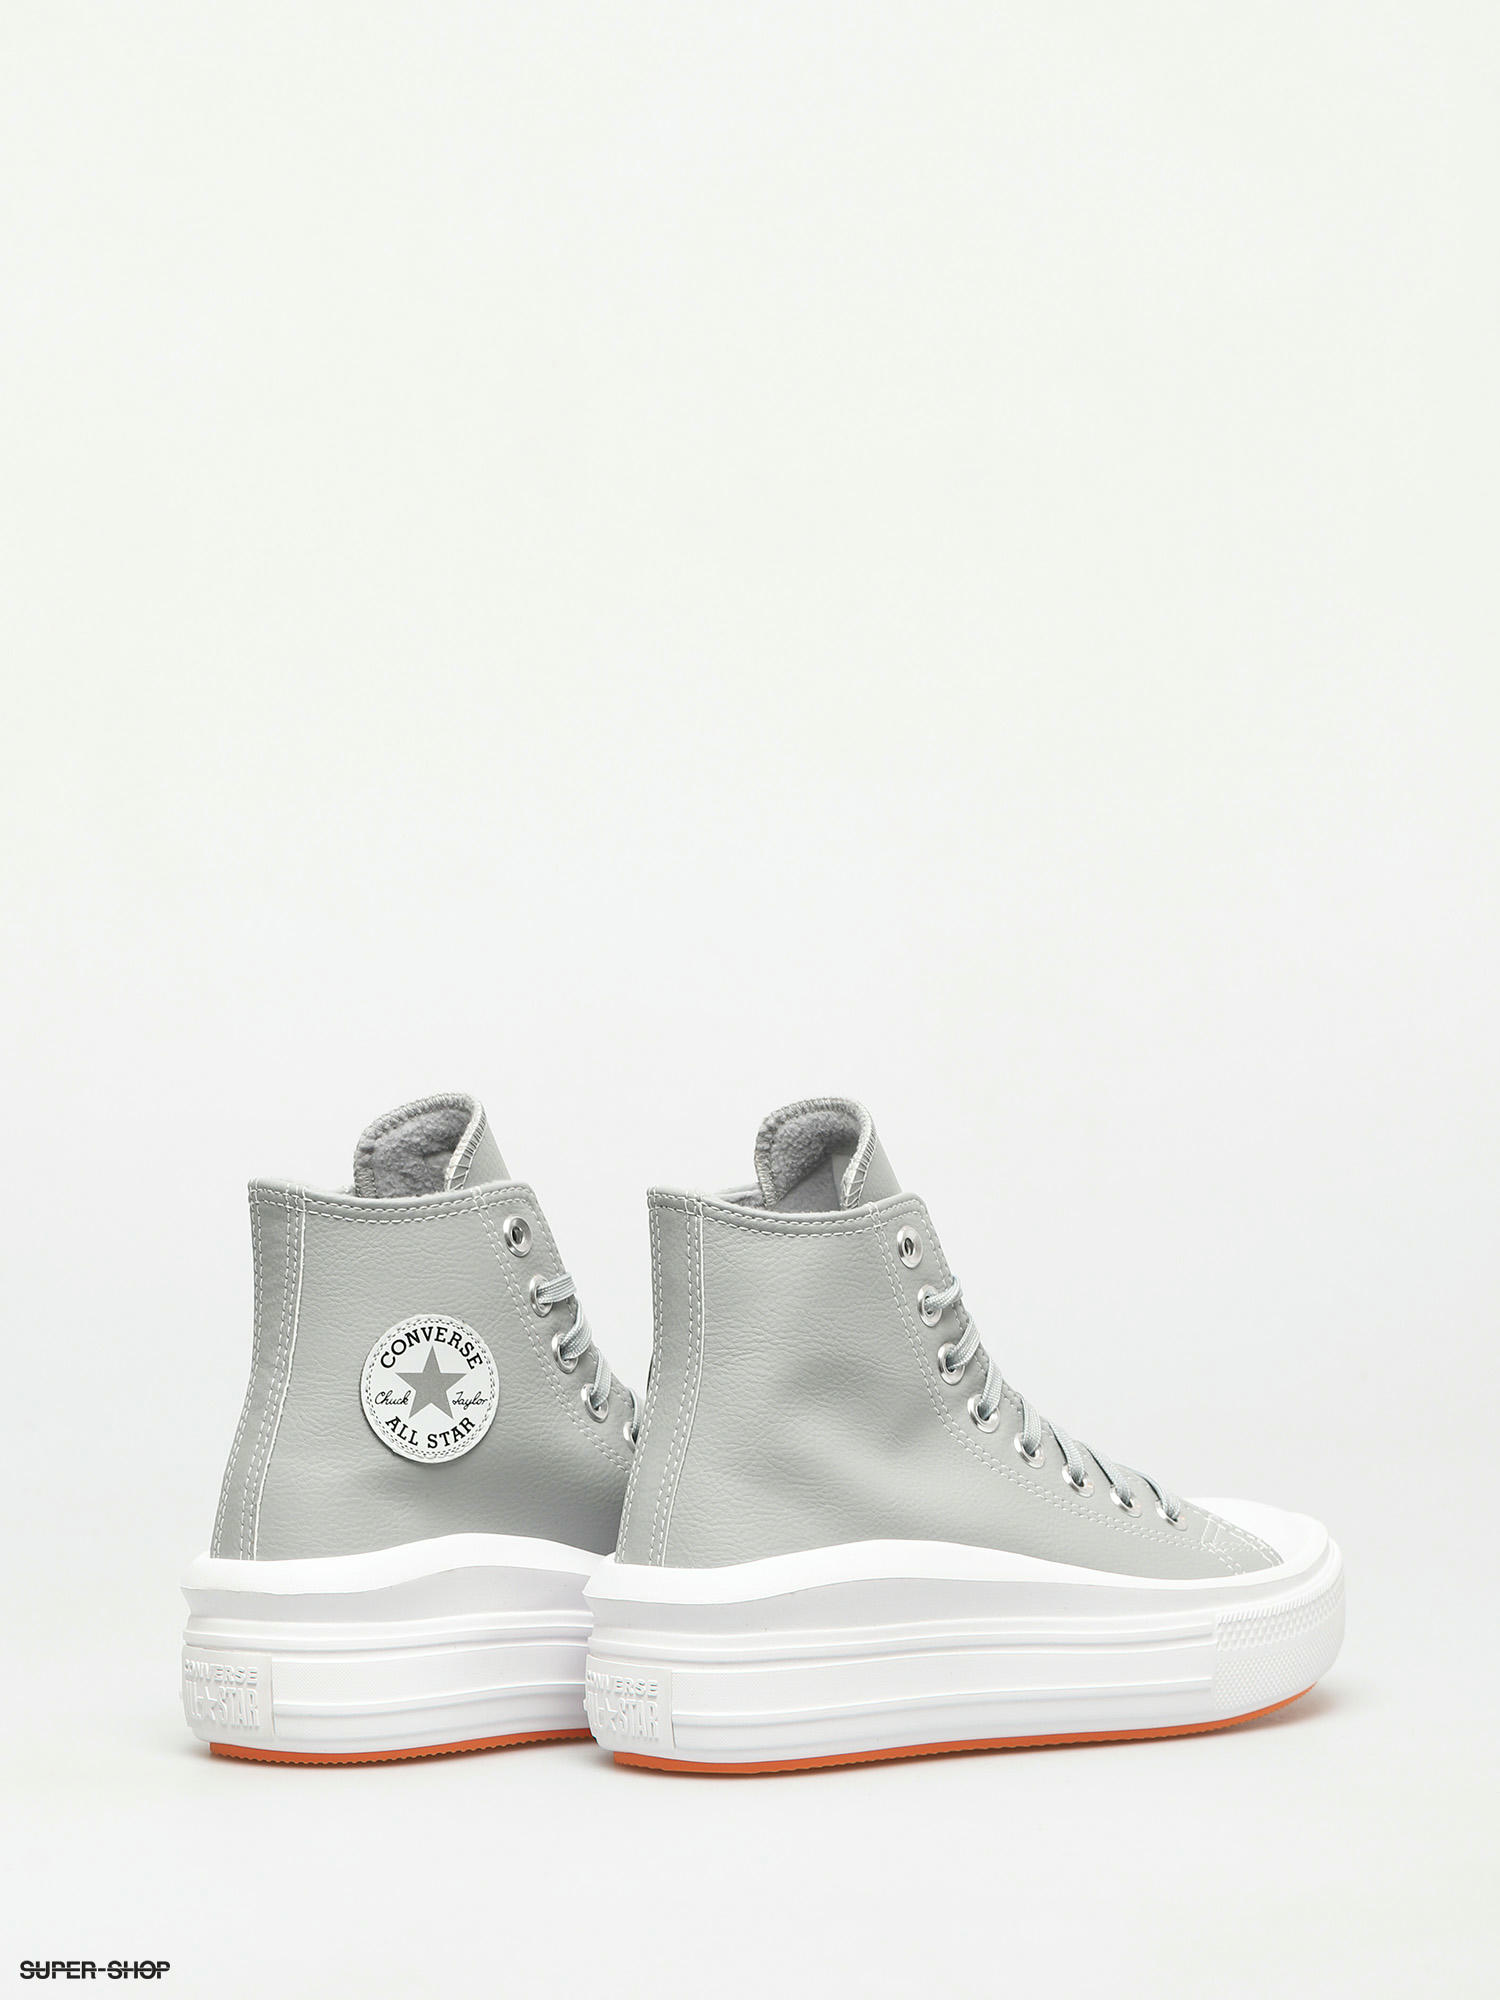 grey white converse